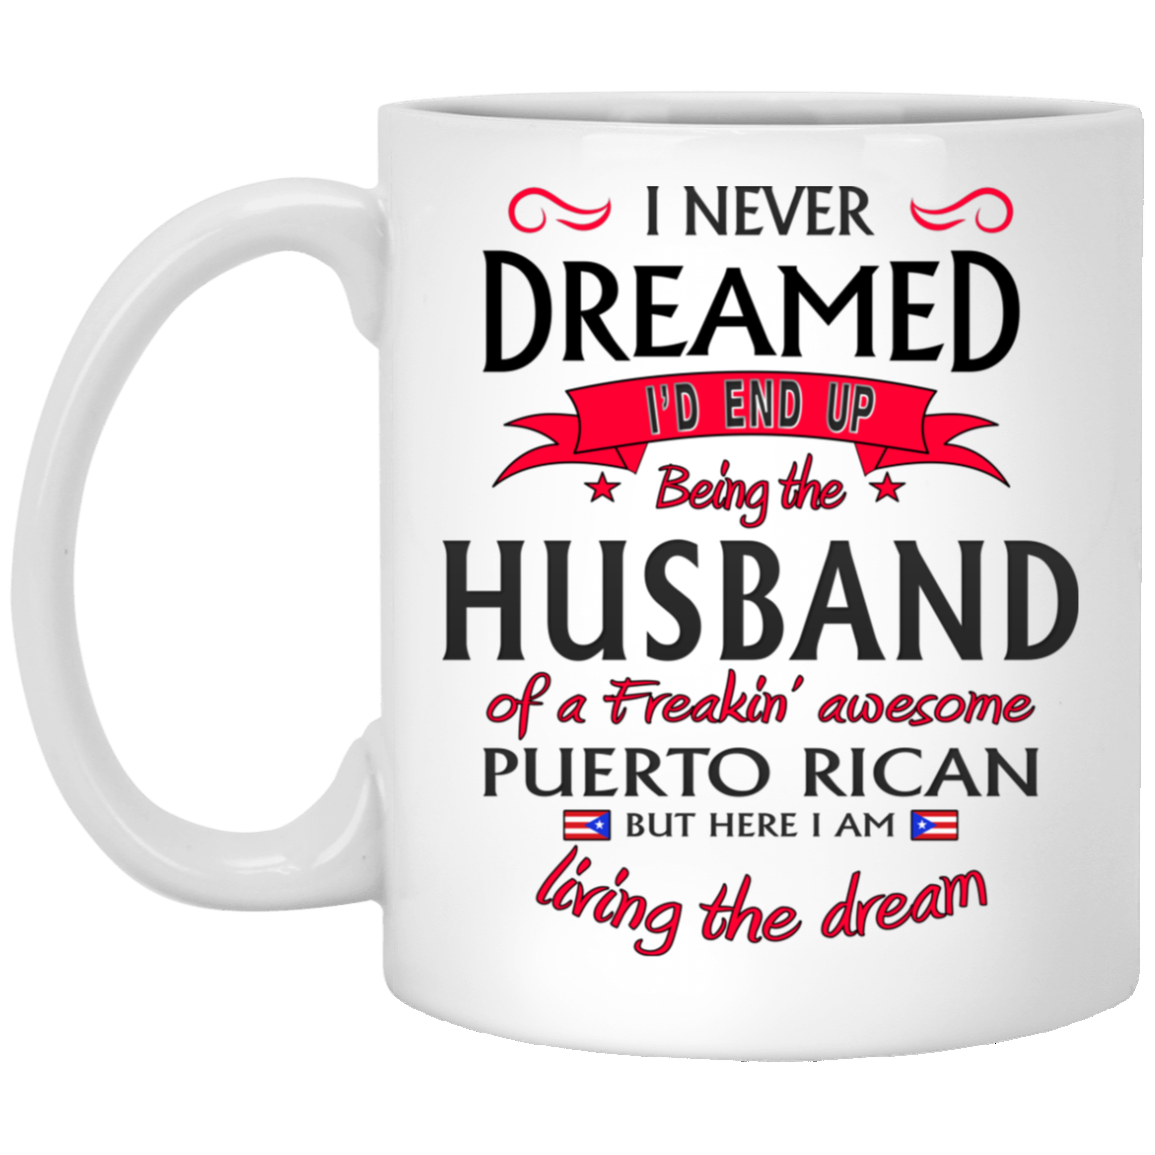 Husband of Awesome PR 11 oz. White Mug - Puerto Rican Pride